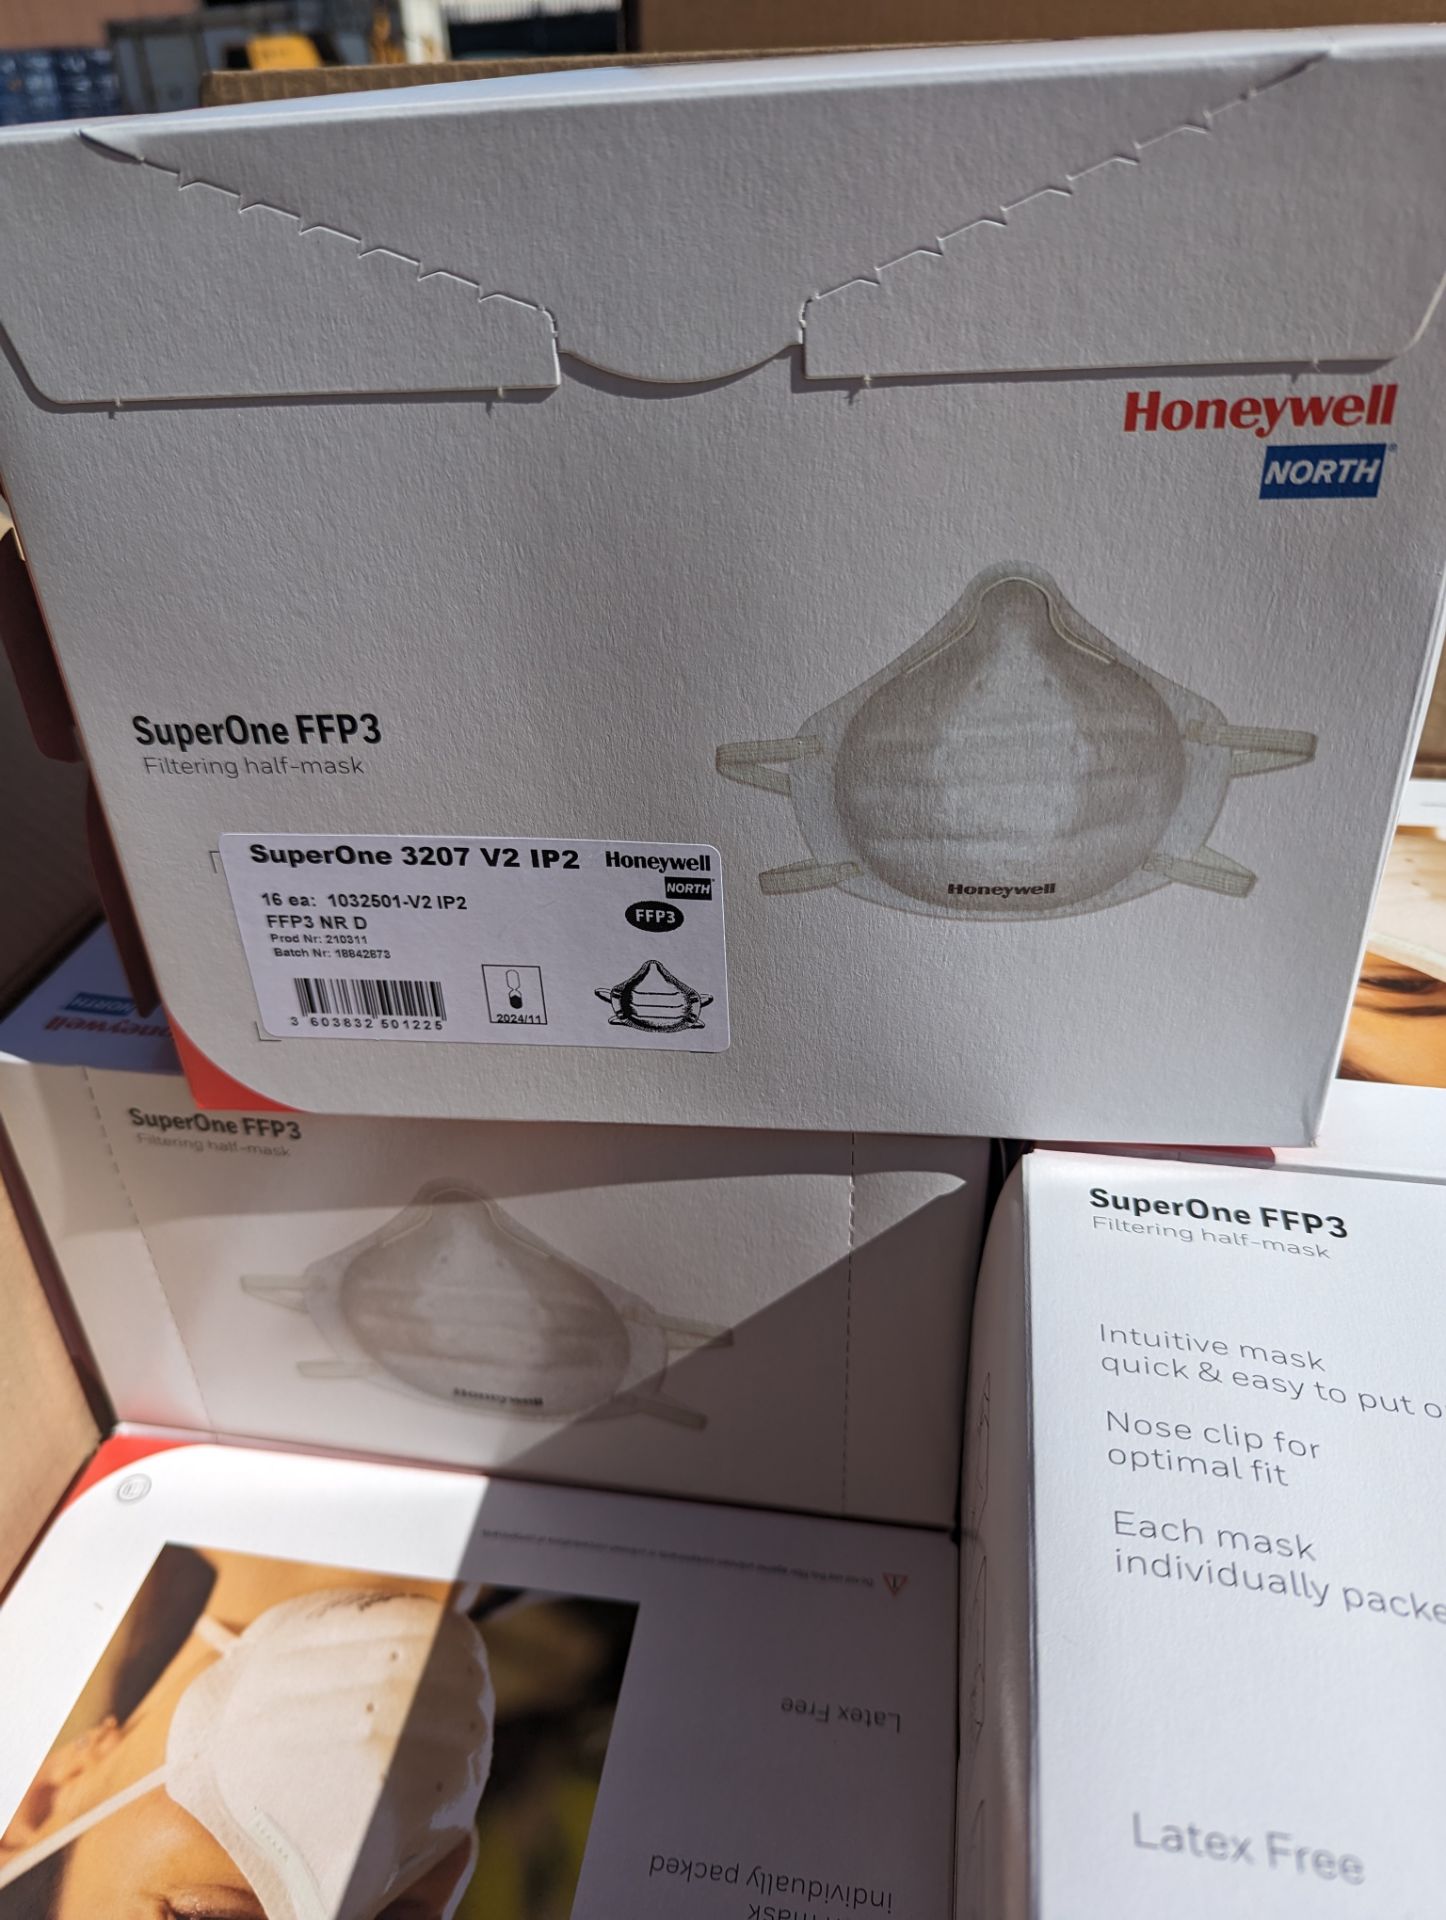 4x Boxes Honeywell SuperOne V2 ip2 FFP3 Filtering Masks - Image 3 of 3